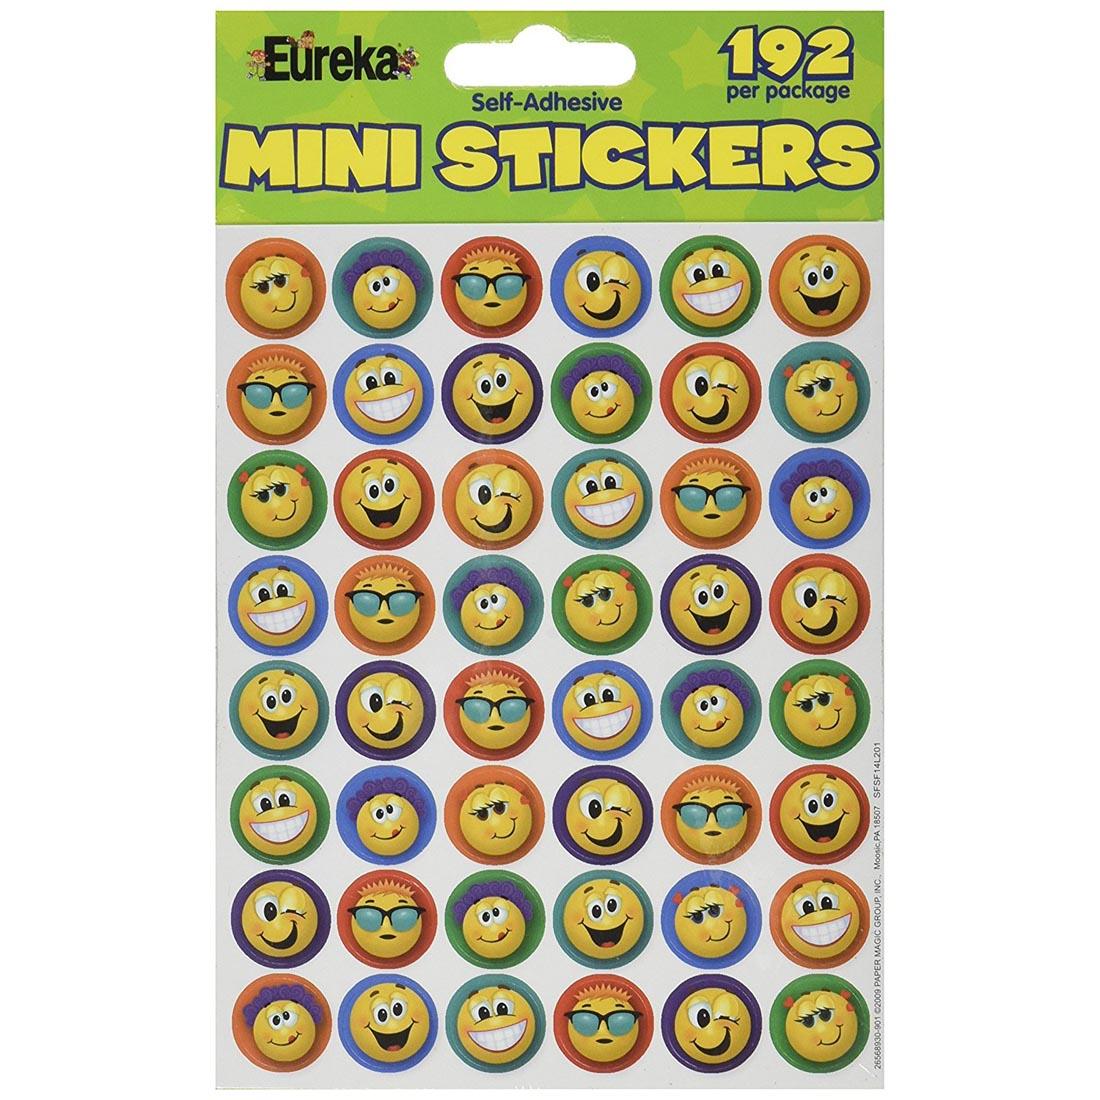 Emoticon Mini Stickers by Eureka